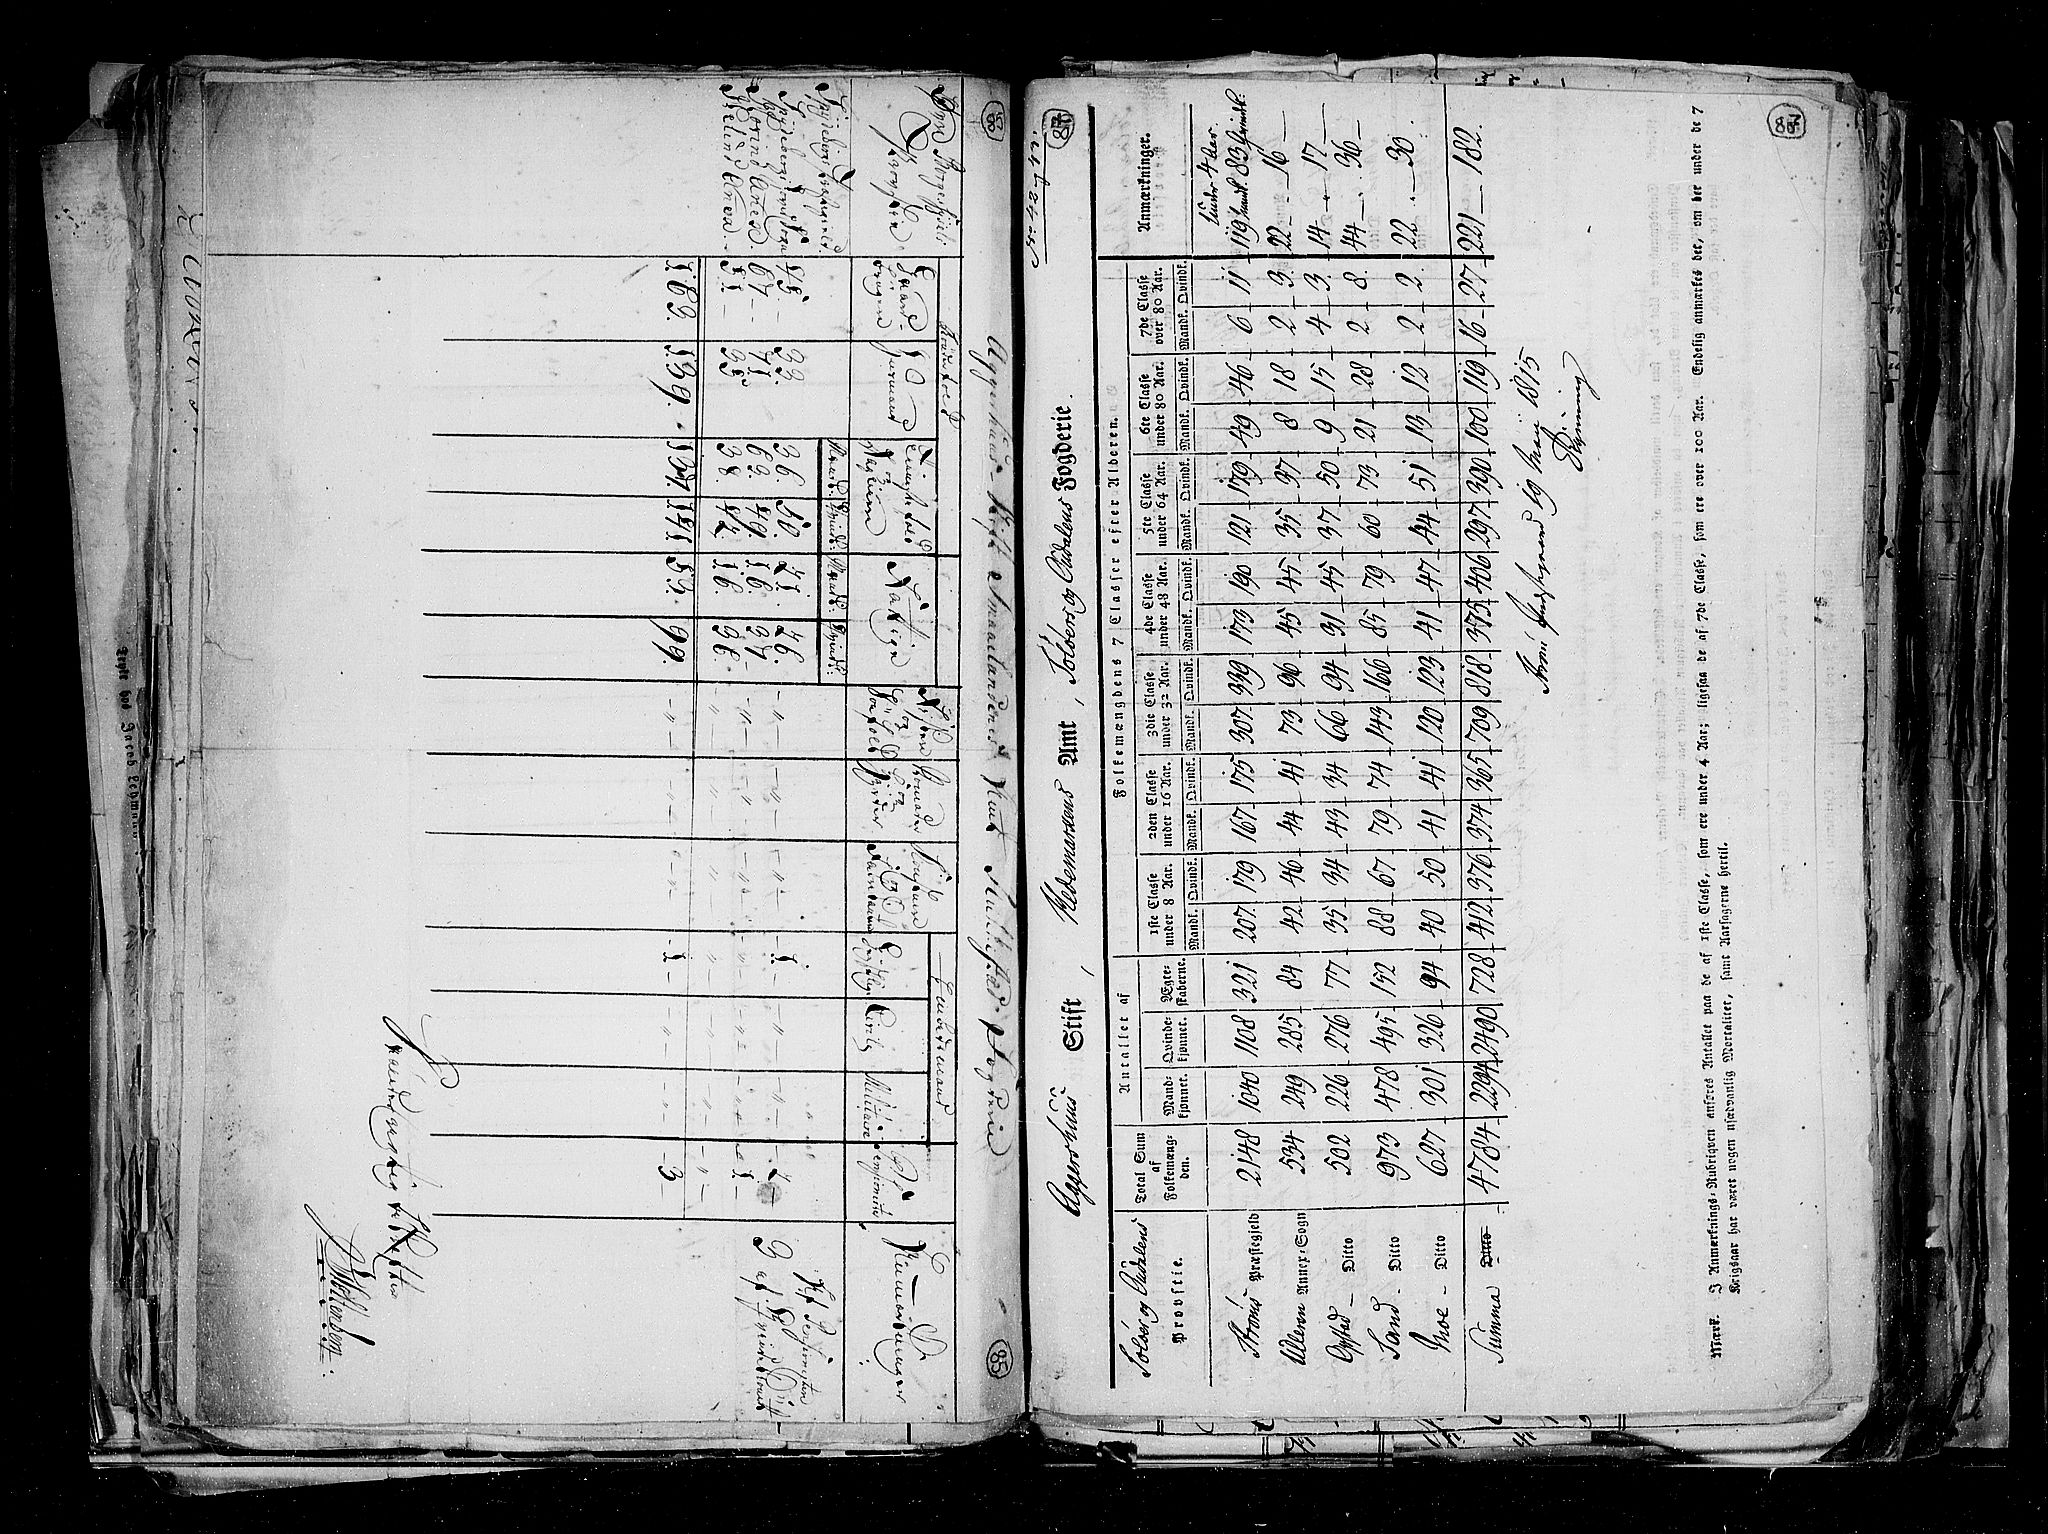 RA, Census 1815, vol. 1: Akershus stift and Kristiansand stift, 1815, p. 56